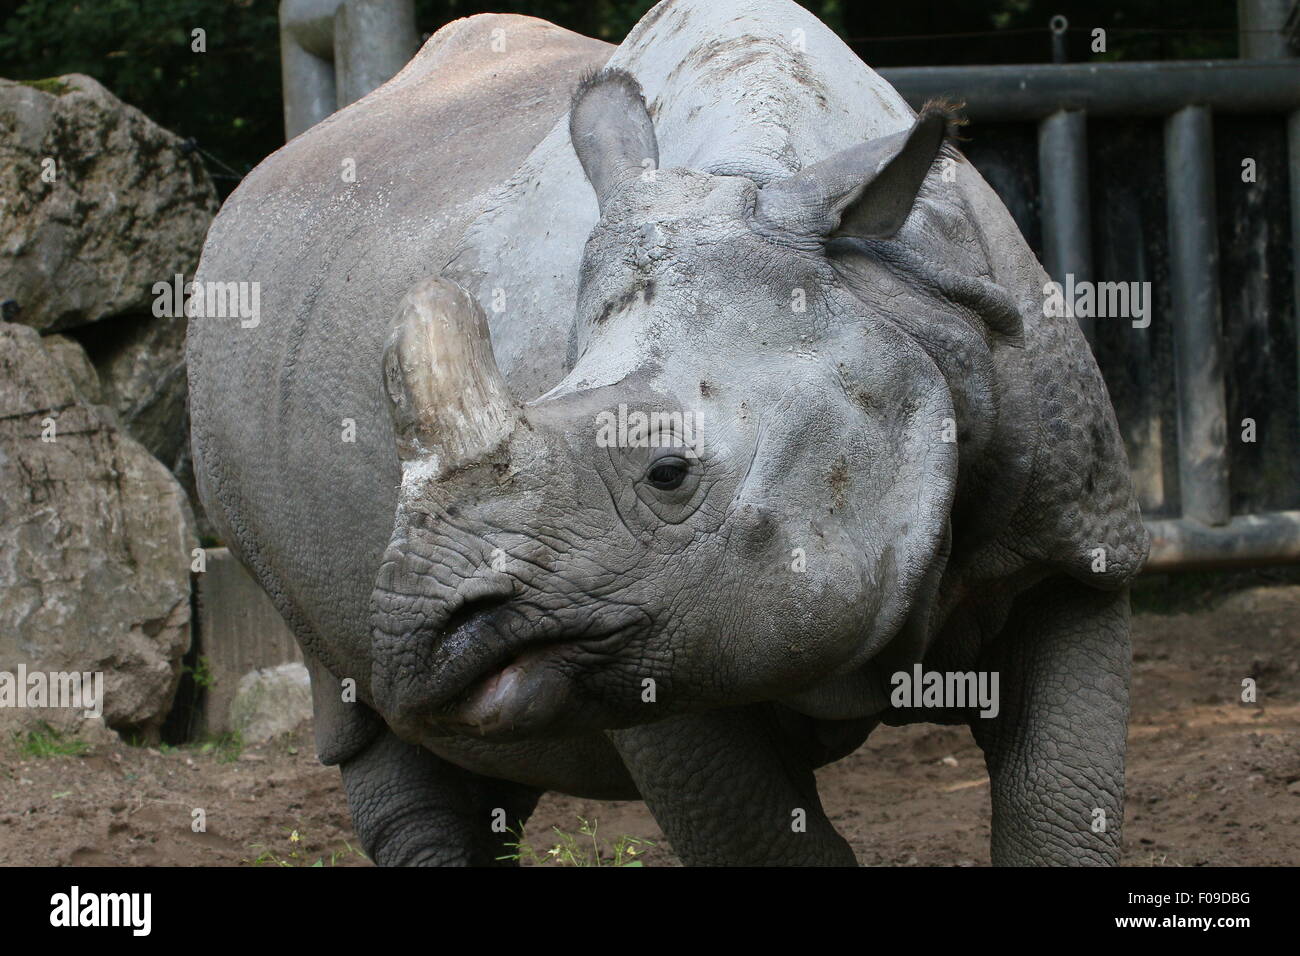 Greater one-horned Indian rhinoceros (Rhinoceros unicornis), closeup of head Stock Photo